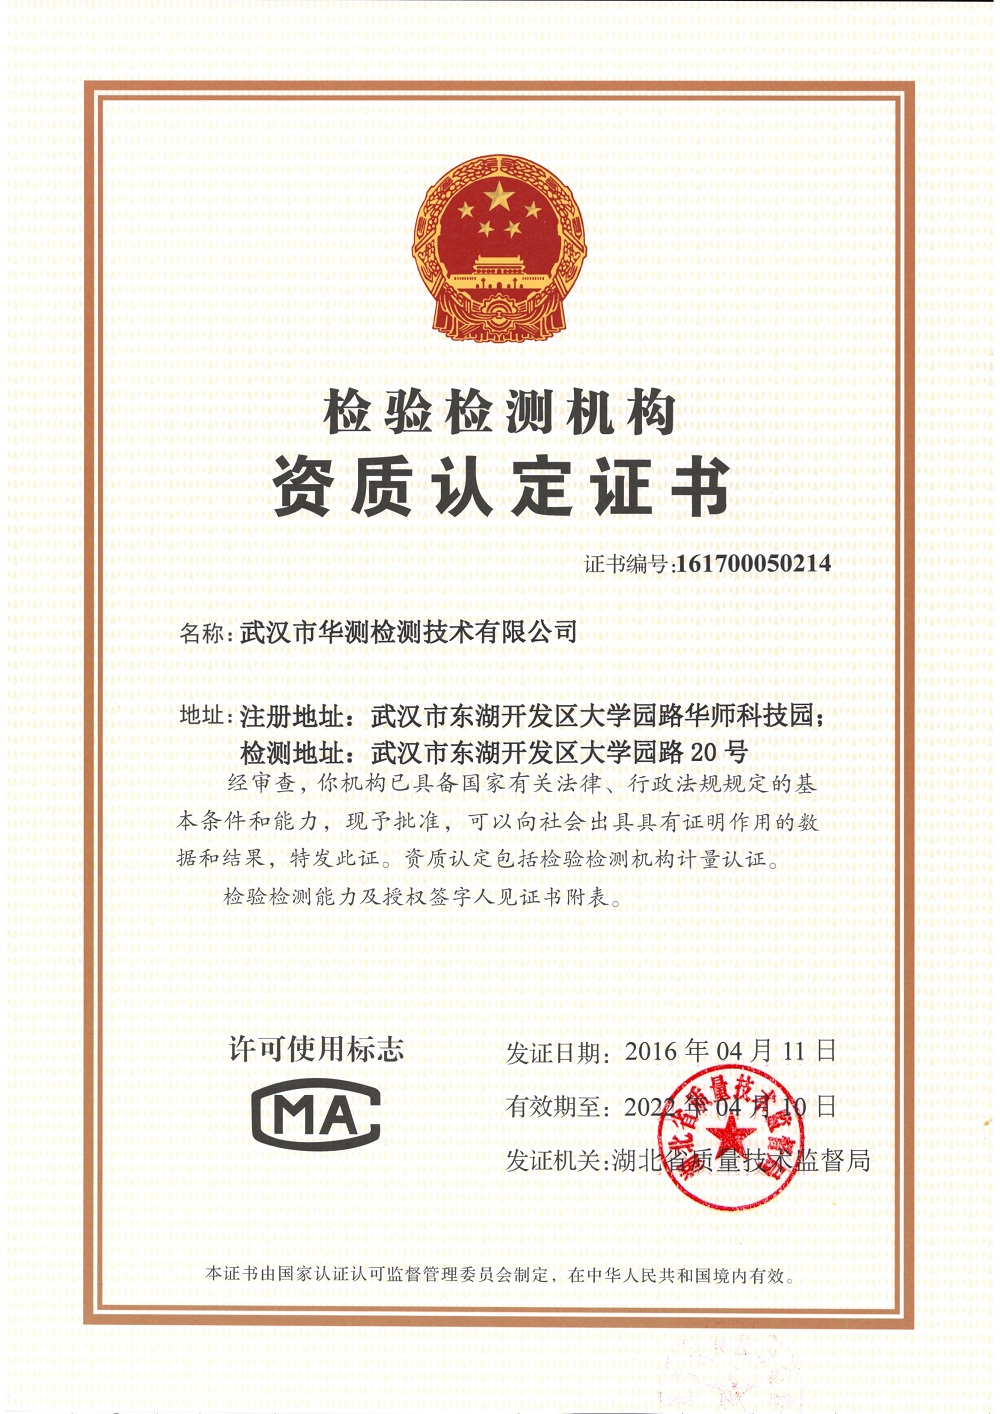 Wuhan CMA Certificate